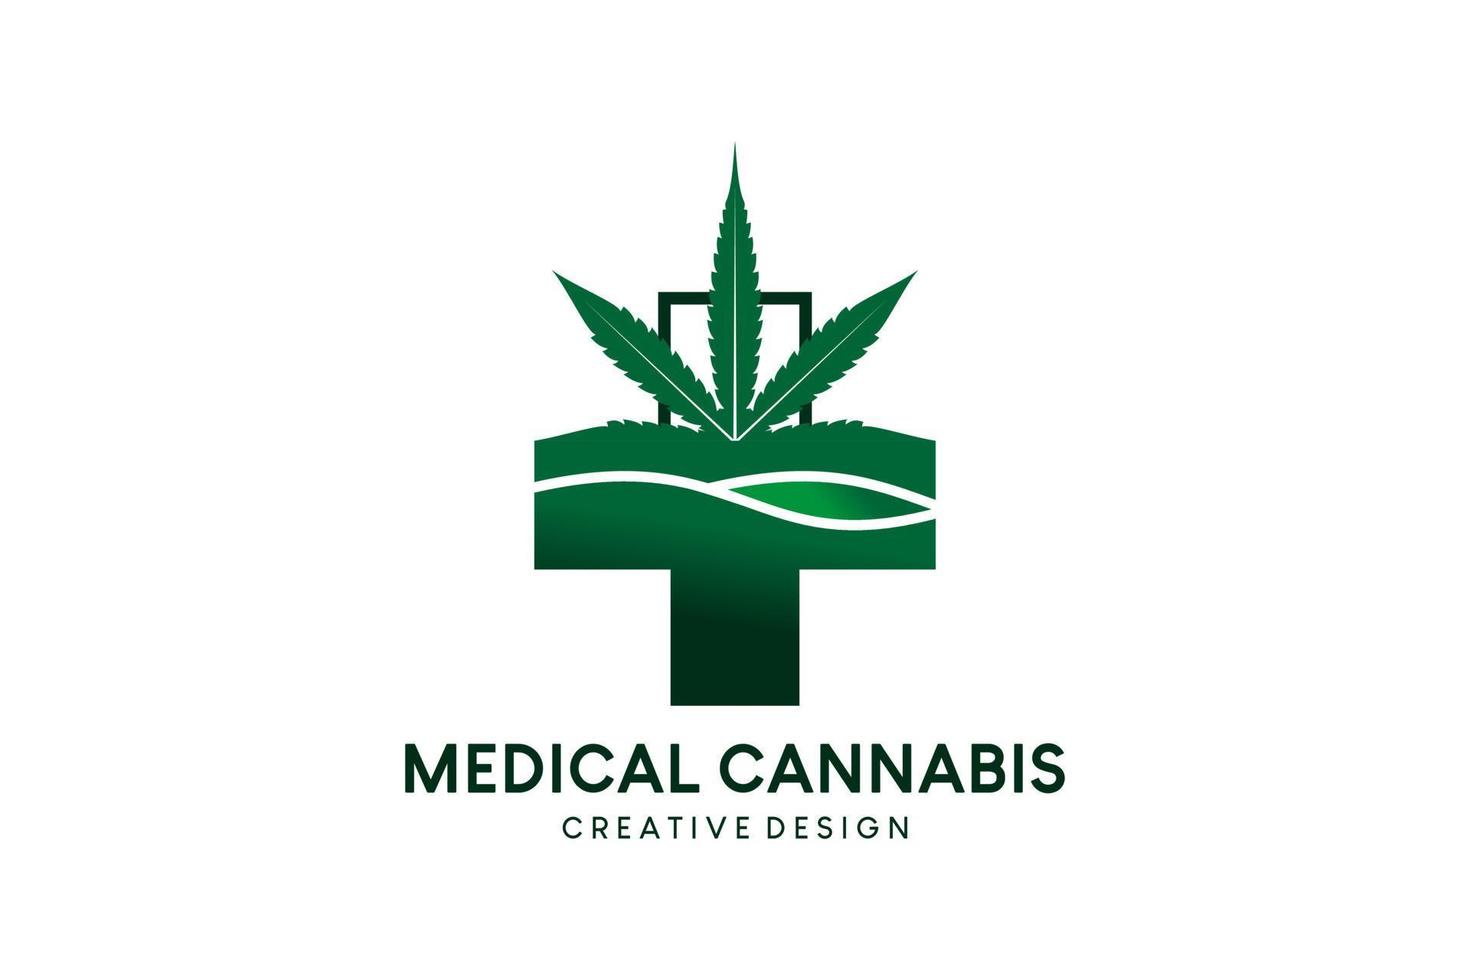 Medical cannabis icon plus logo design with creative simple concept vector